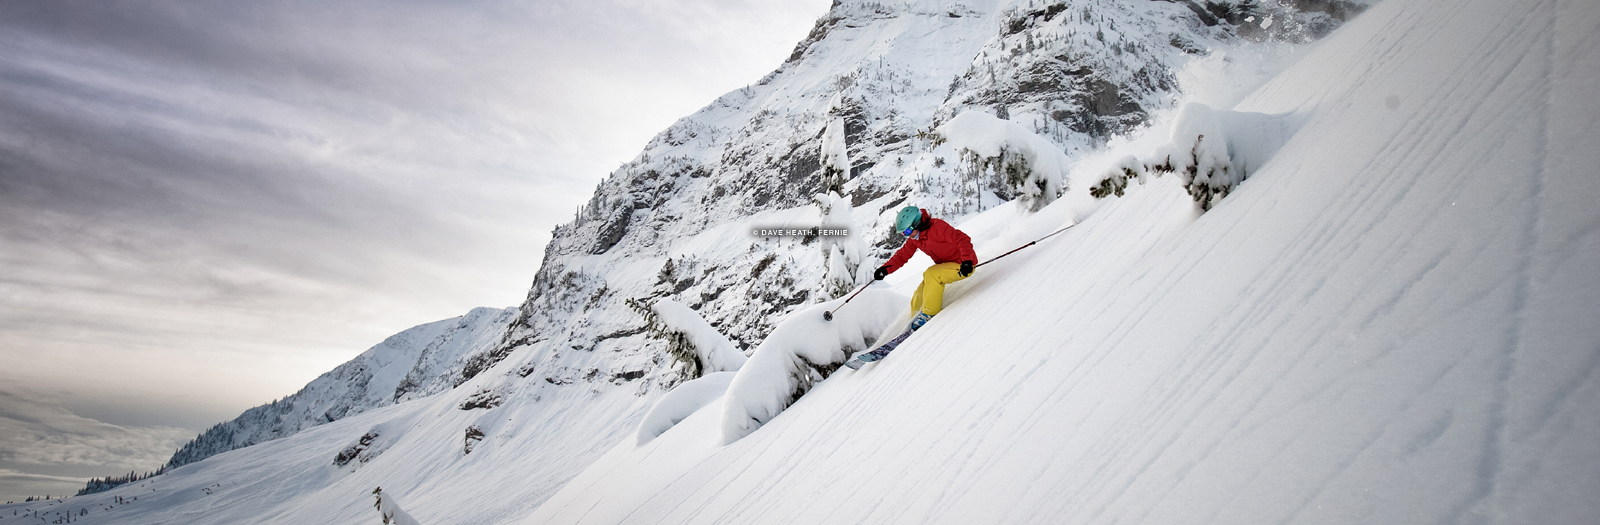 Best Fernie ski resort lodging hotels and accomodations